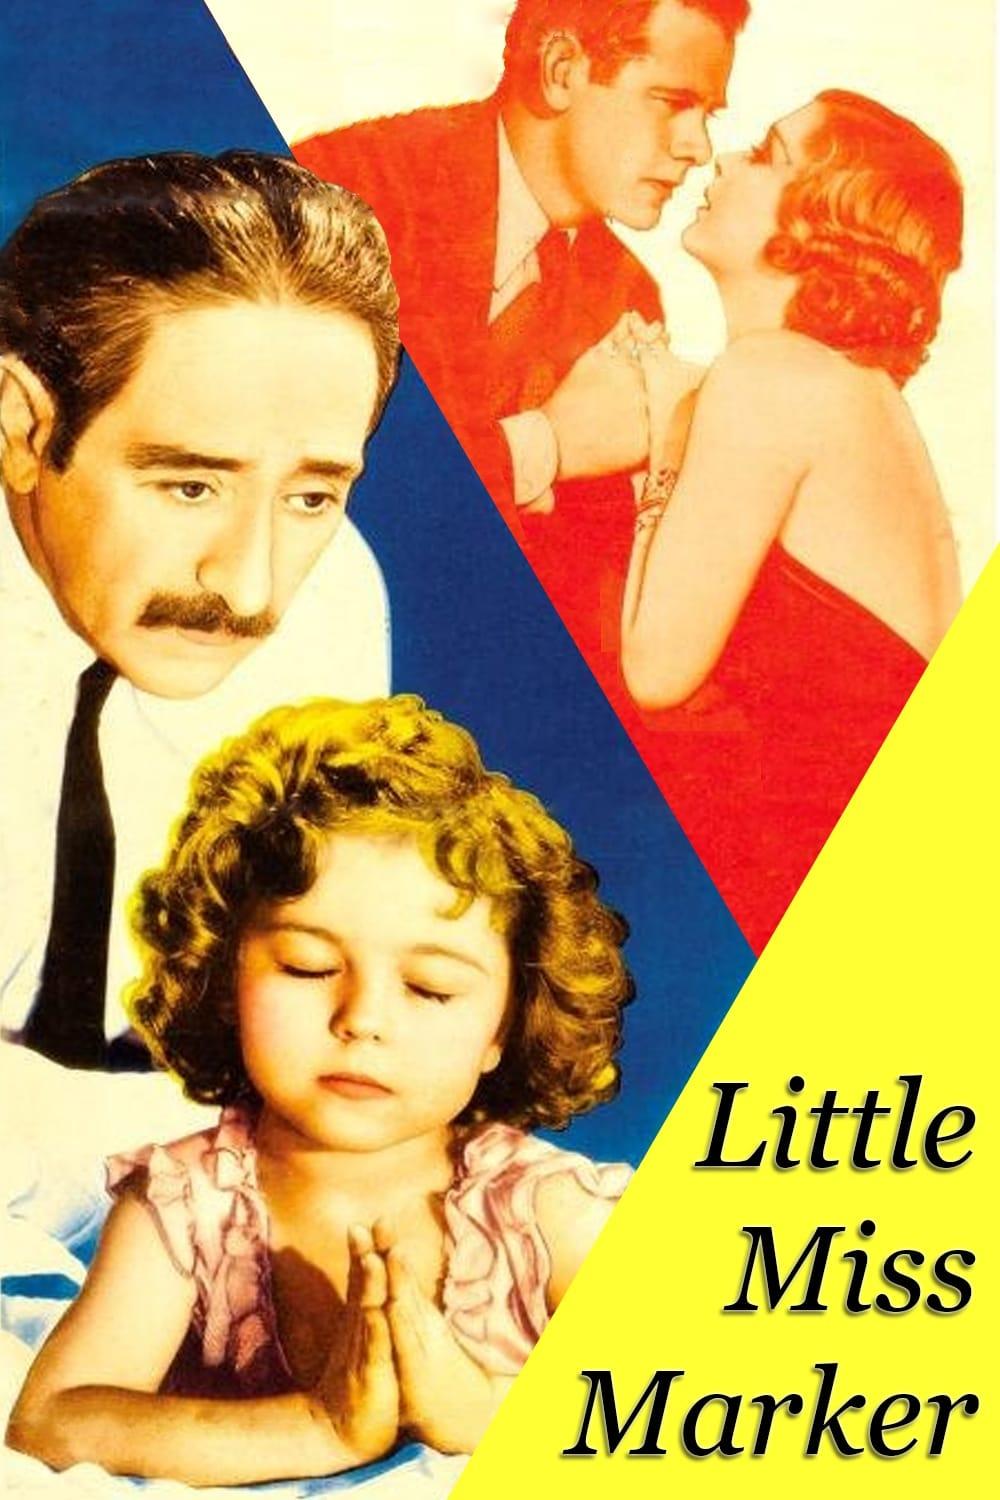 Little Miss Marker poster